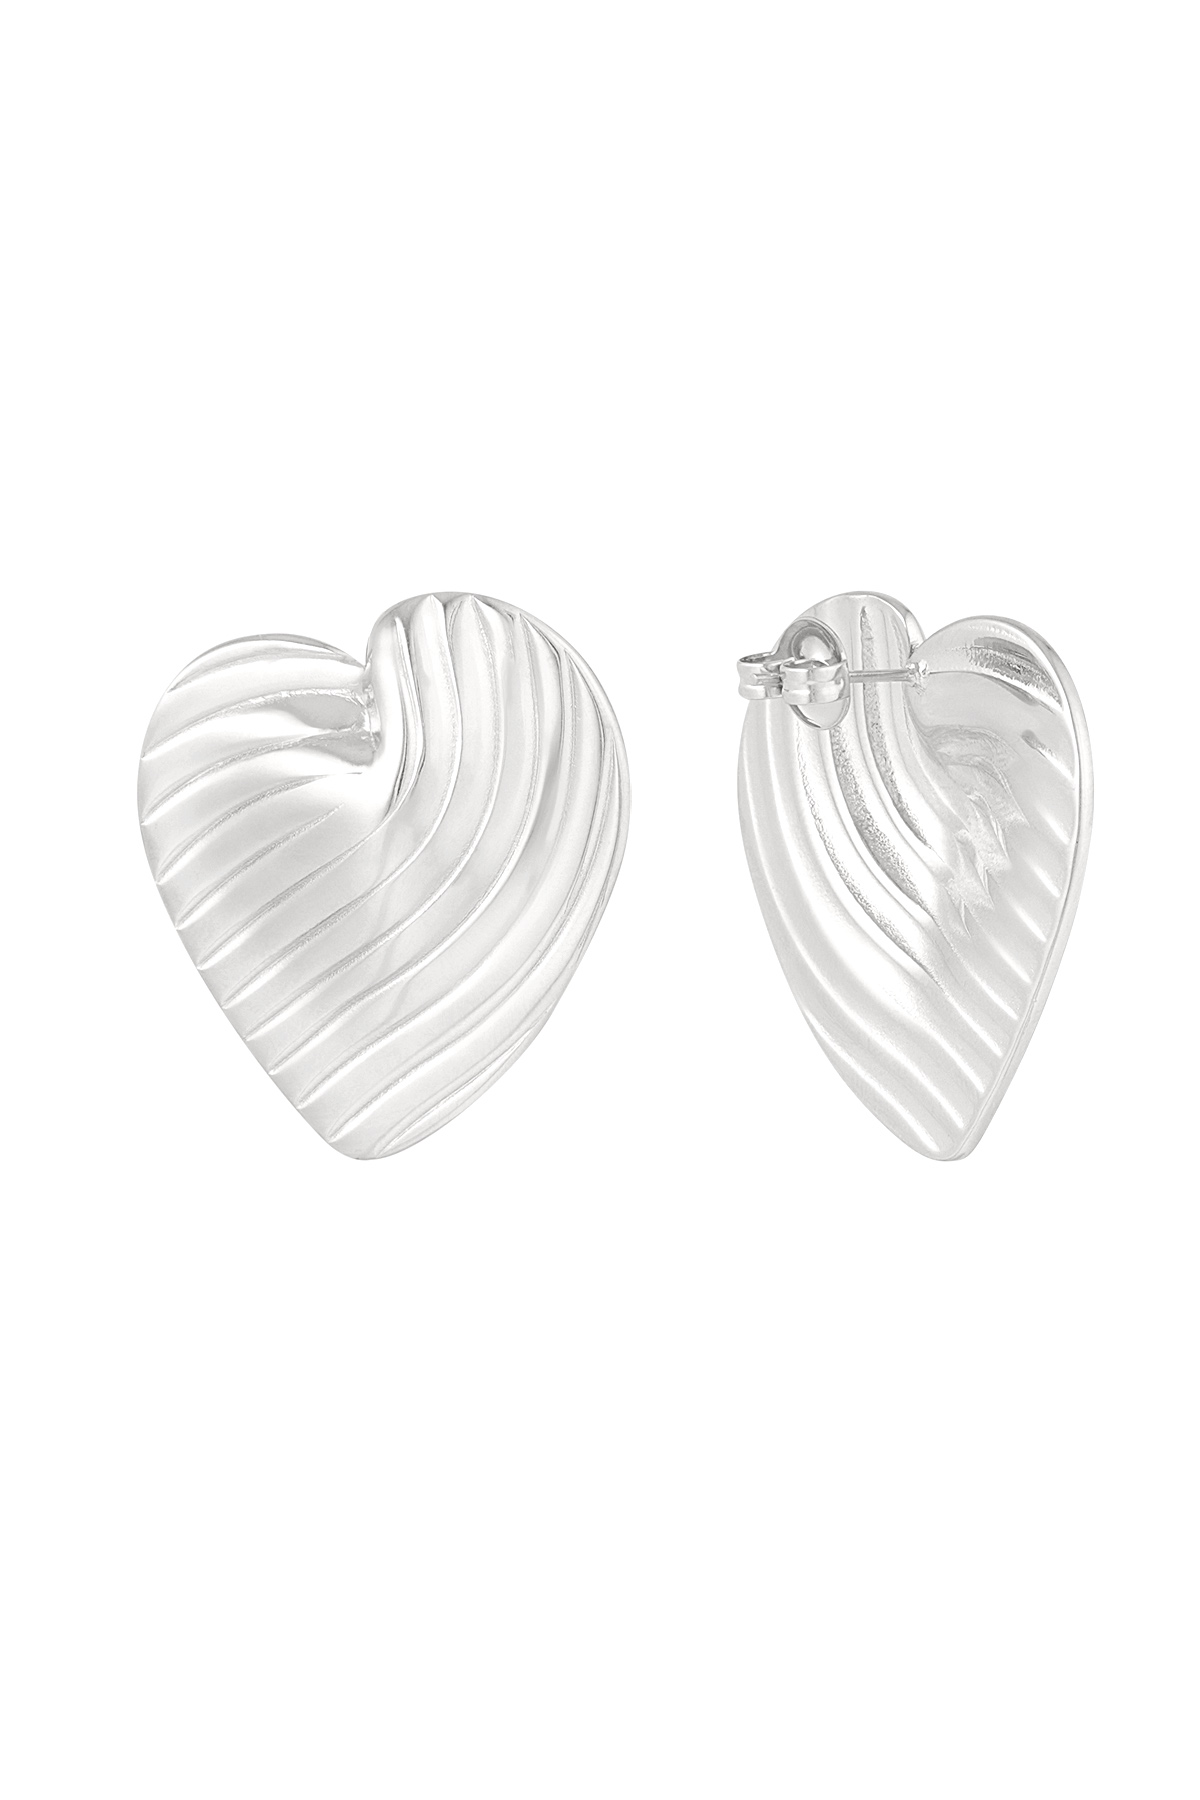 Statement earrings forever love - silver